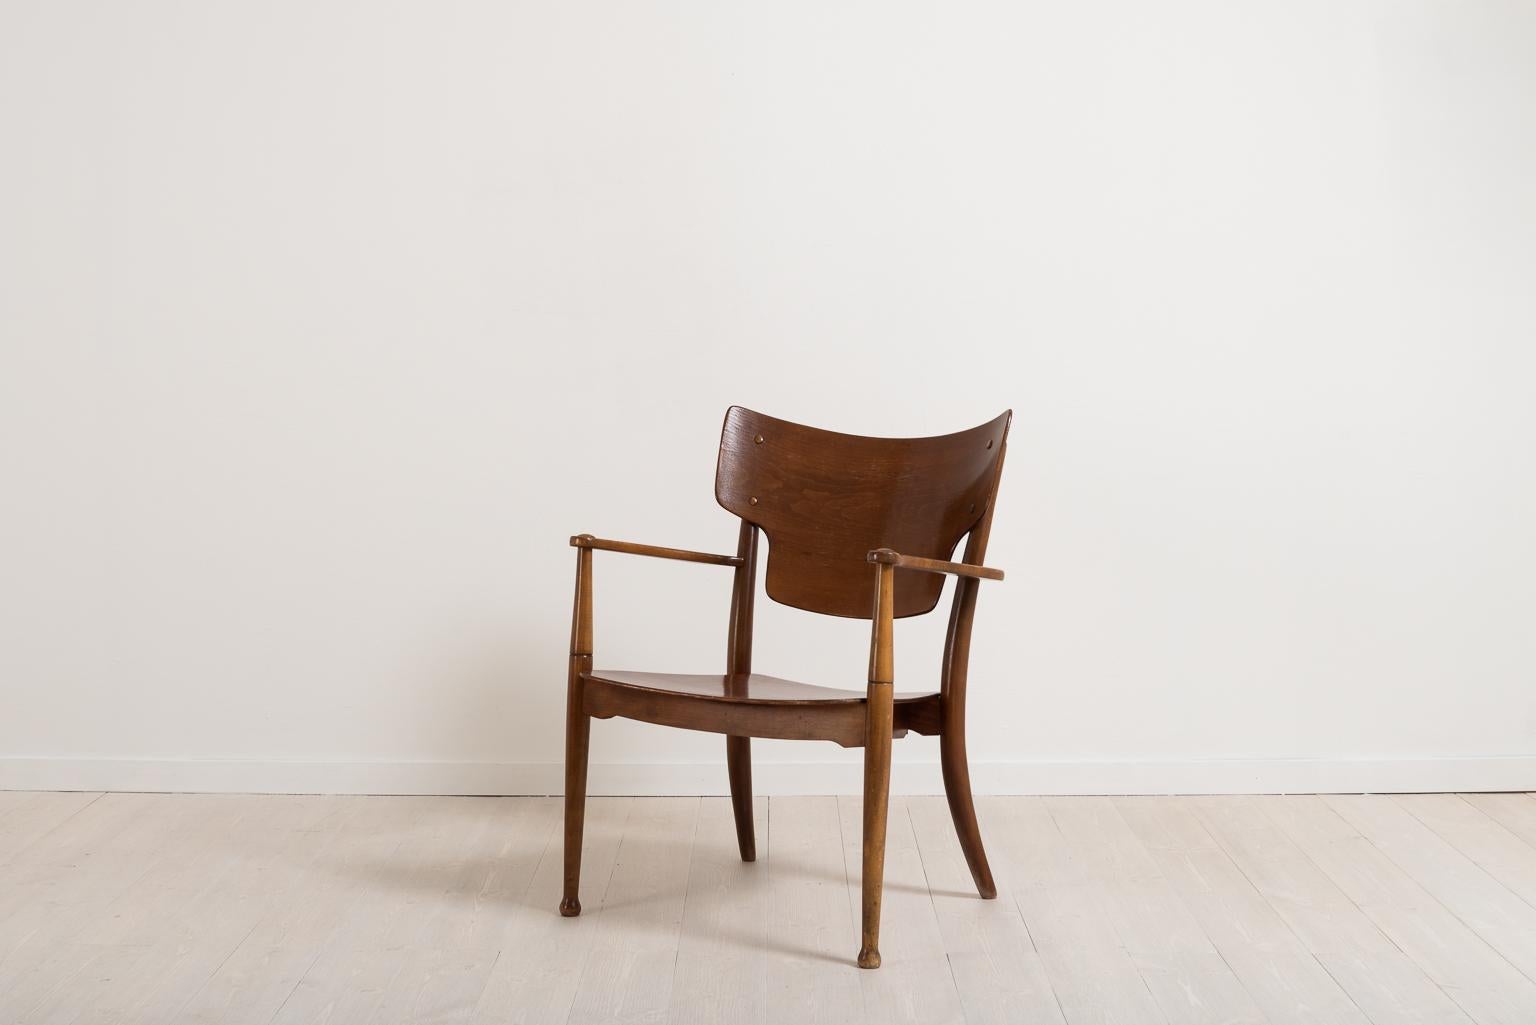 Mid-Century Modern Chair 'Portex' Designed 1944 by Peter Hvidt and Orla Molgaard-Nielsen